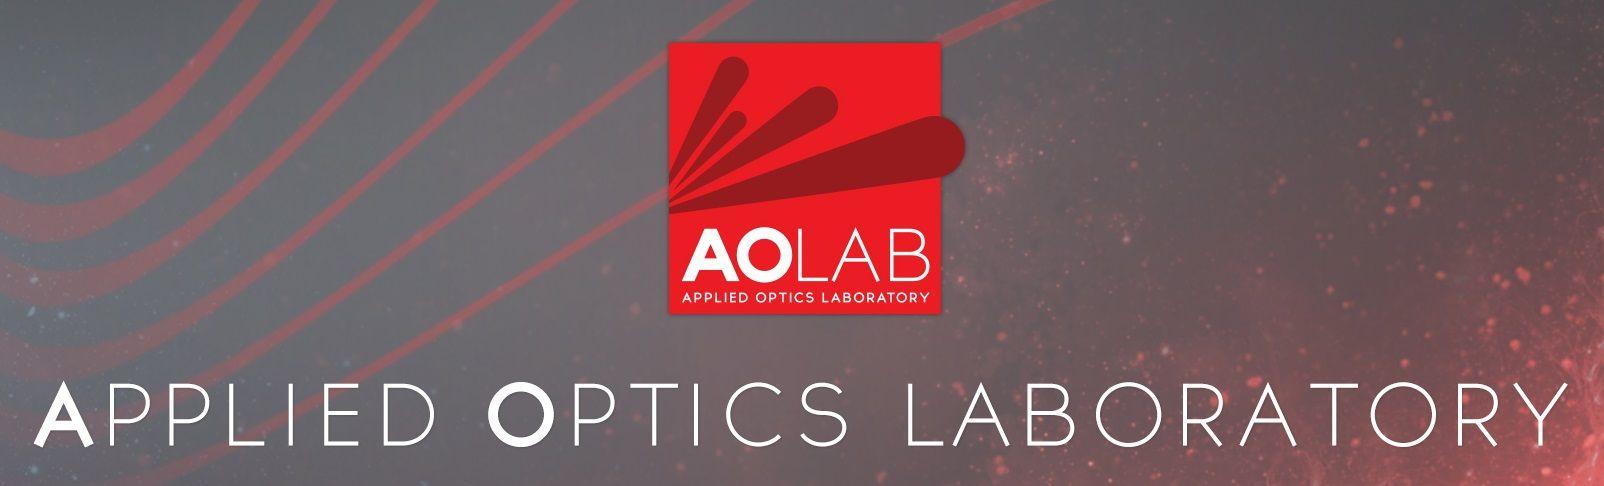 Optics Lab Logo - Applied Optics Laboratory of Wireless Communications